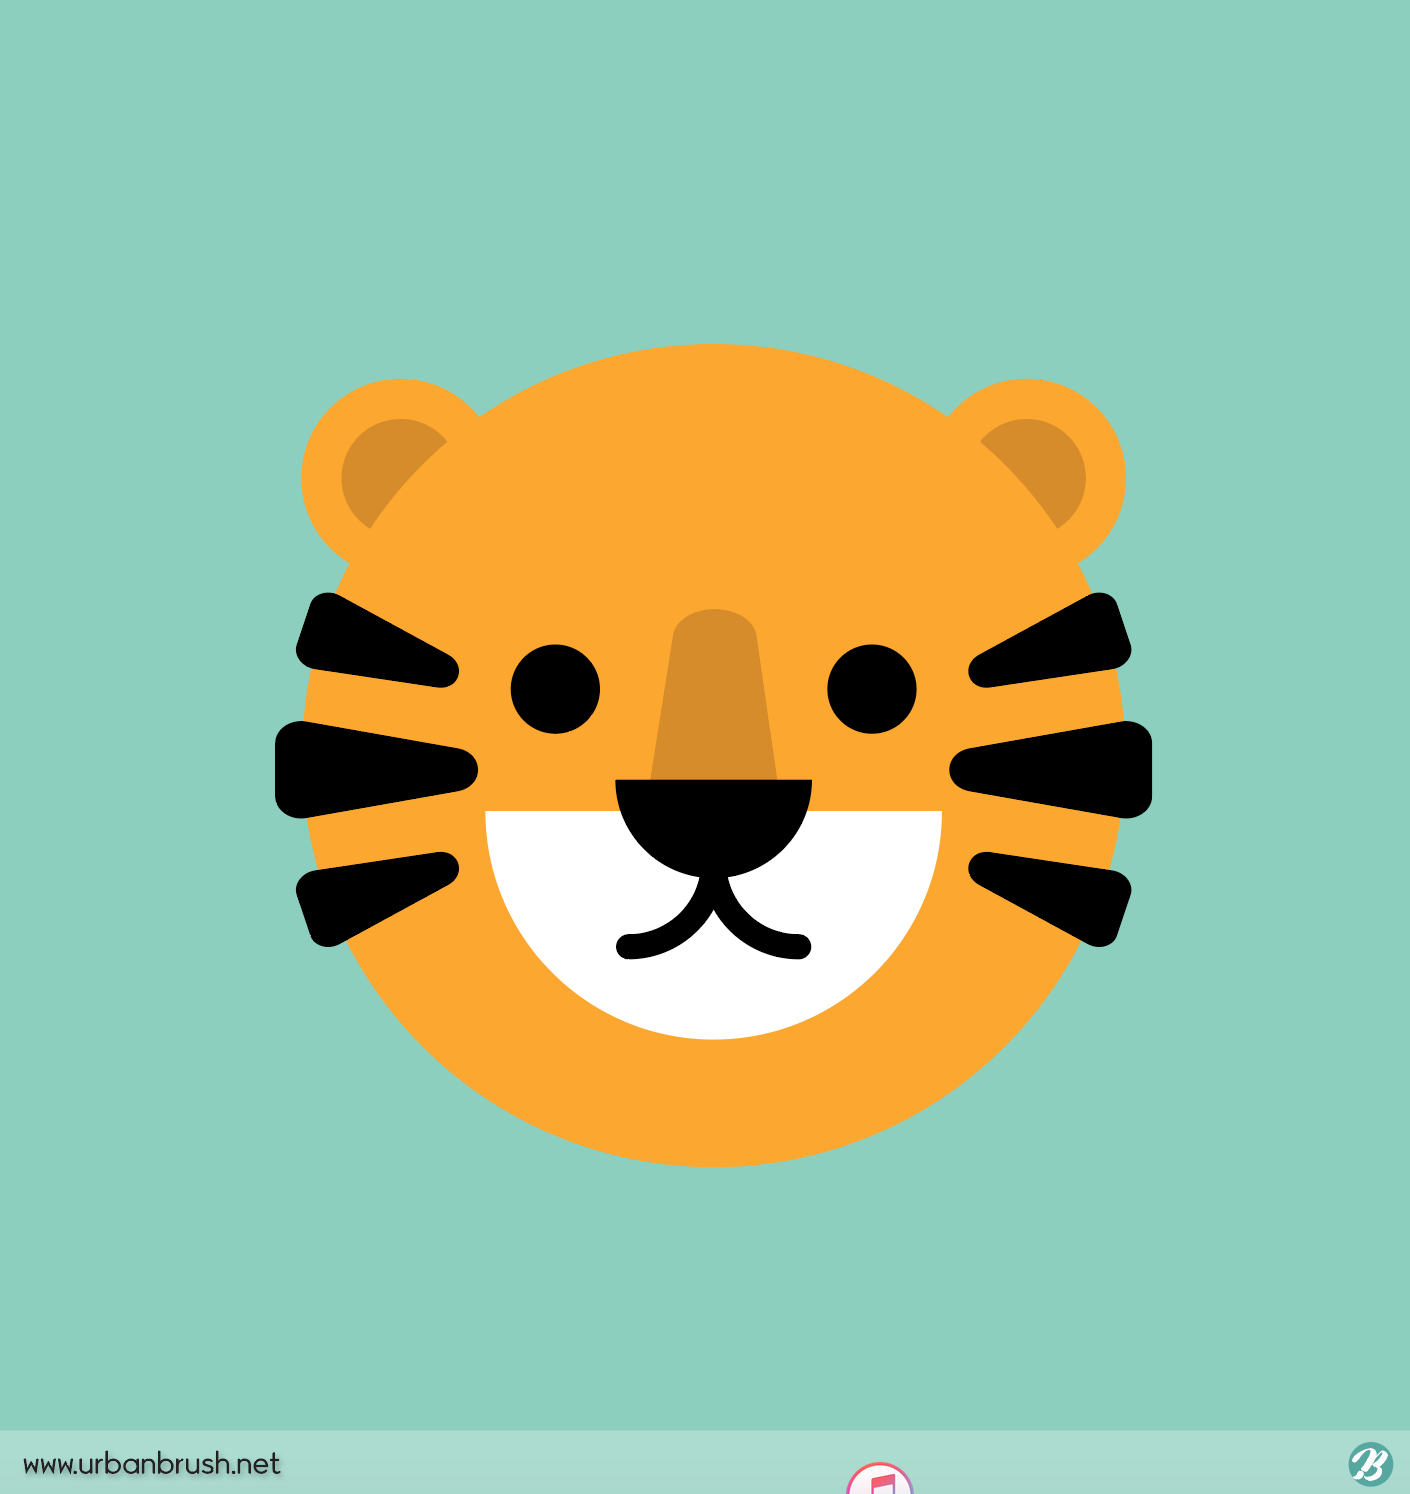 Tiger illustration ai free download free Tiger vector download - Urbanbrush